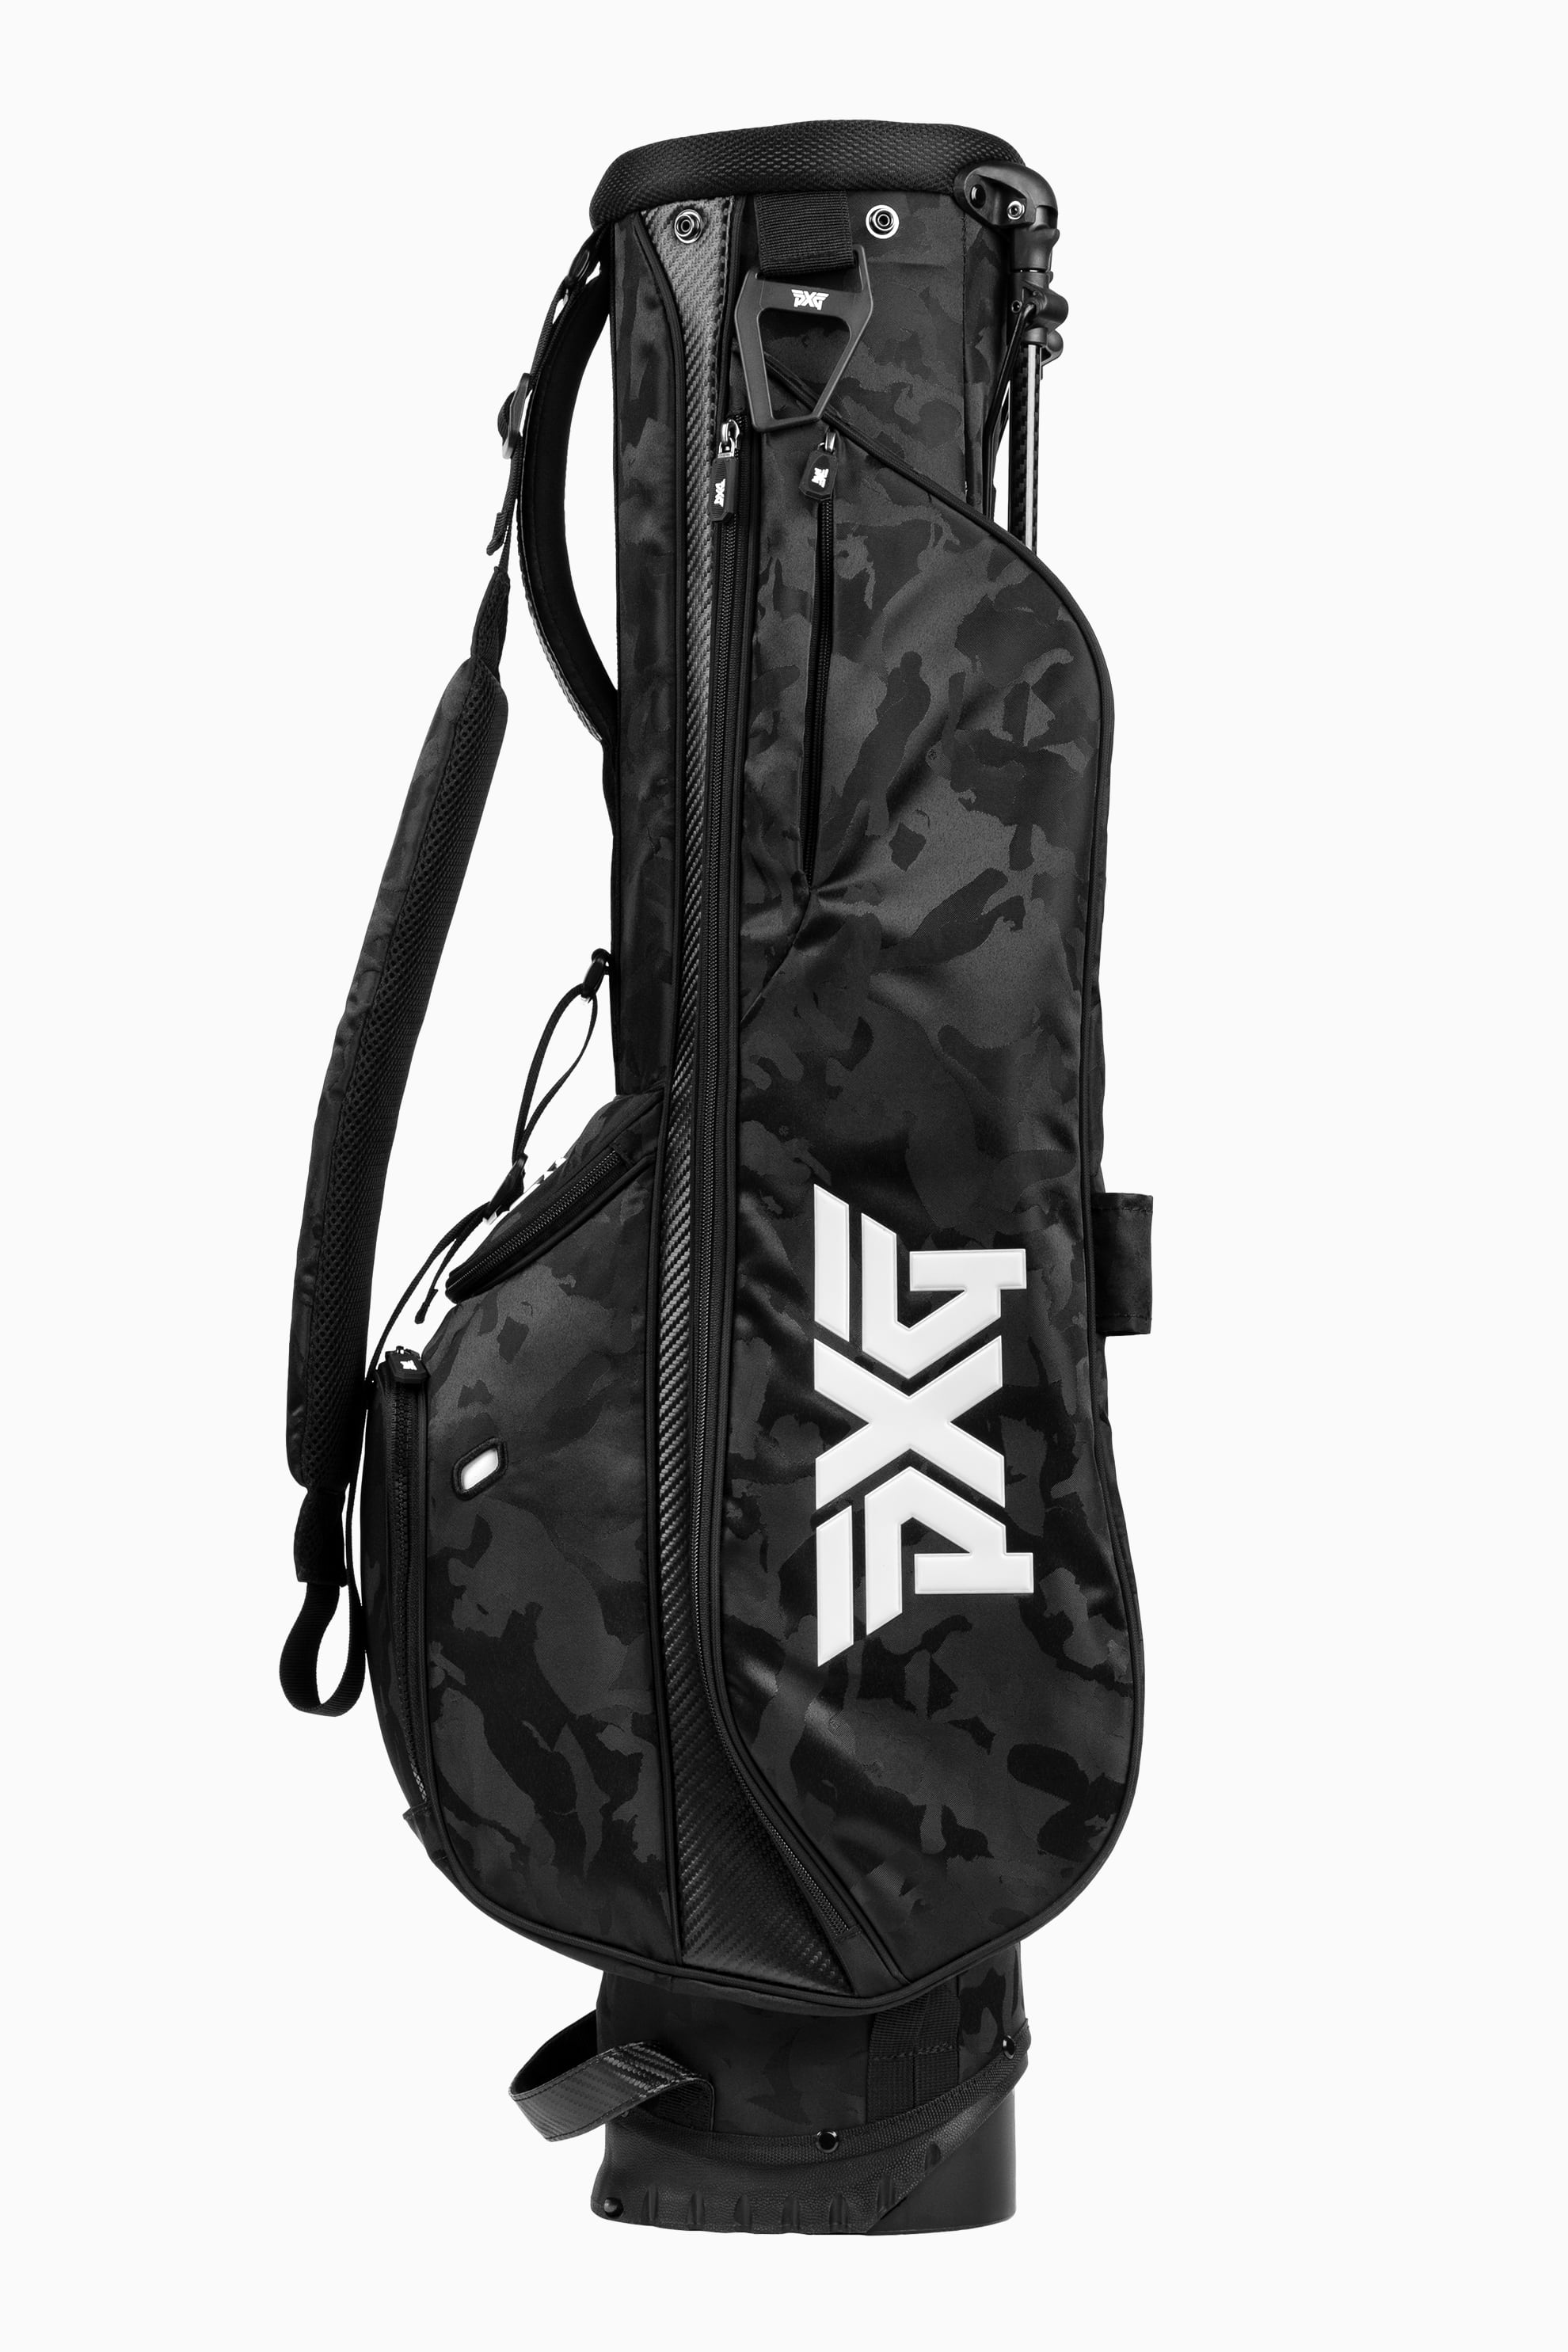 PXG Unisex Jacquard Woven Fairway Camo Backpack